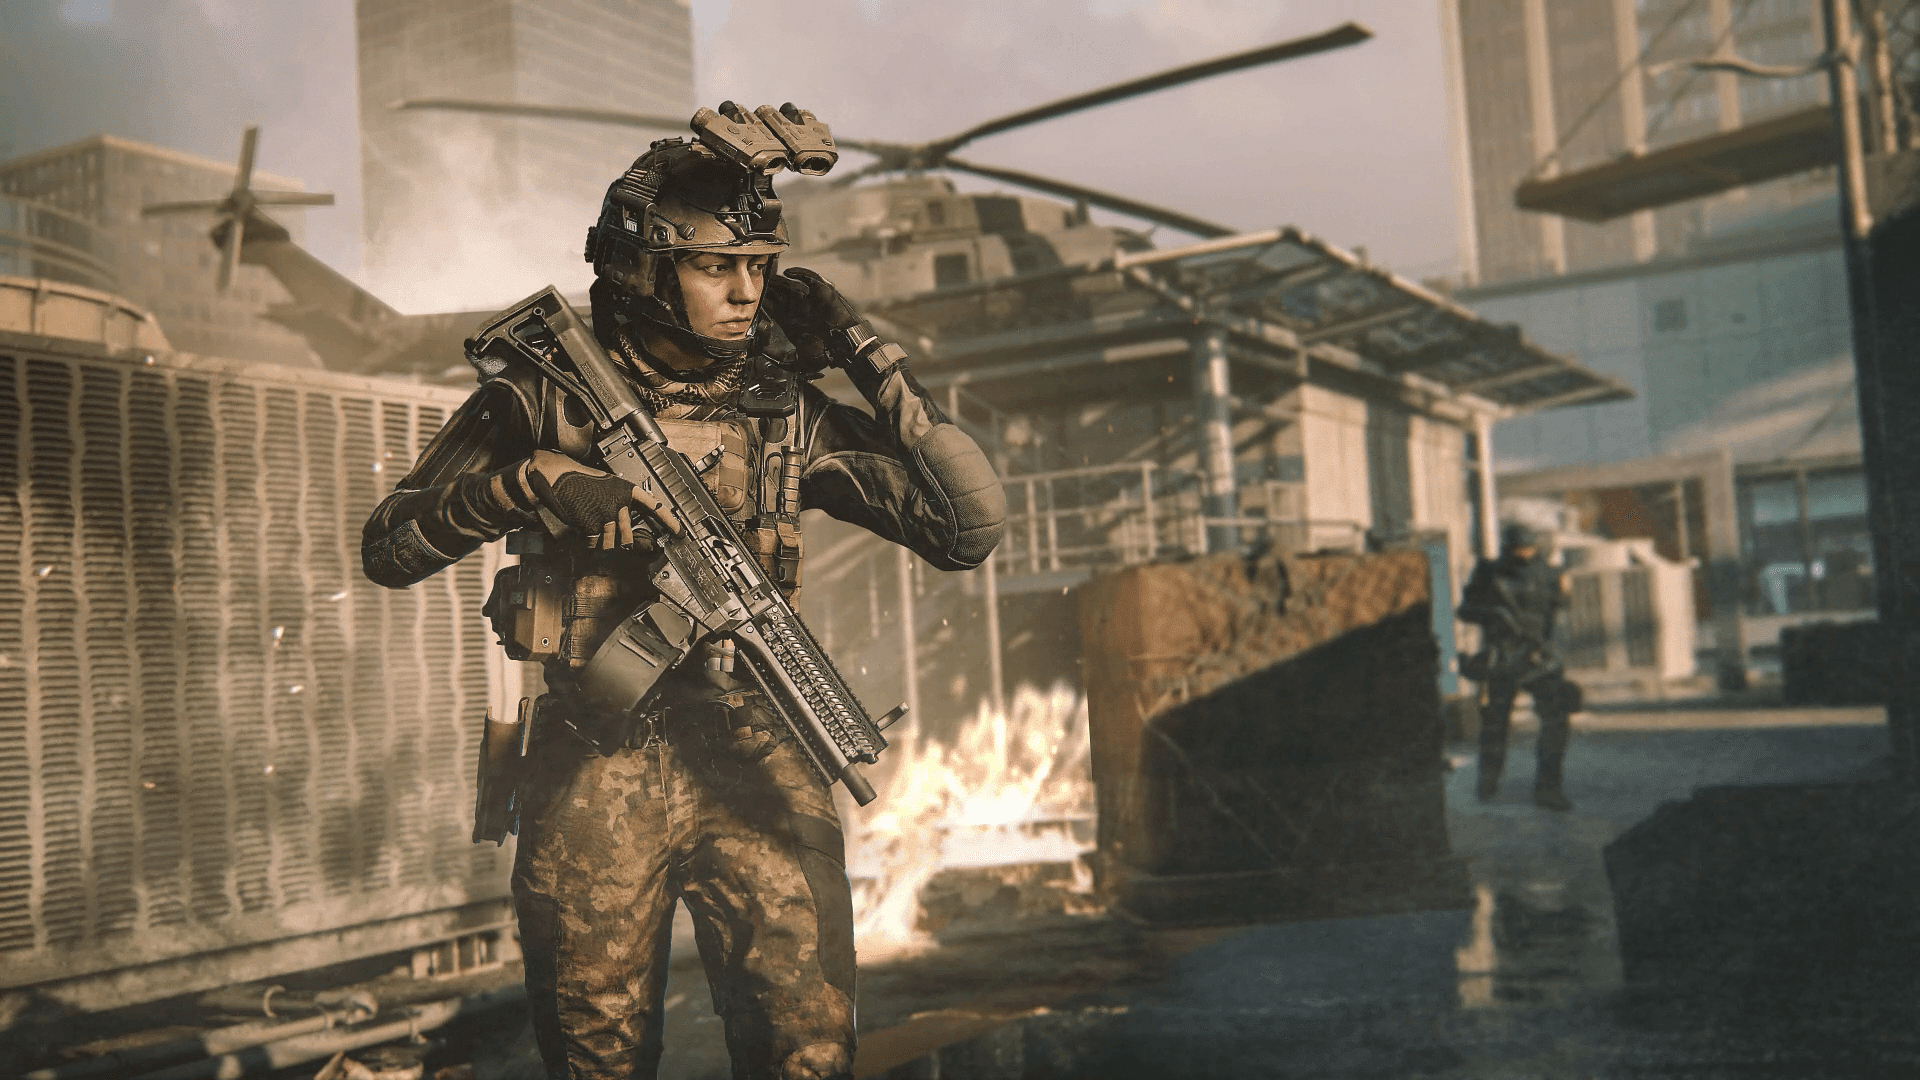 The best weapons in Call of Duty: Modern Warfare 3